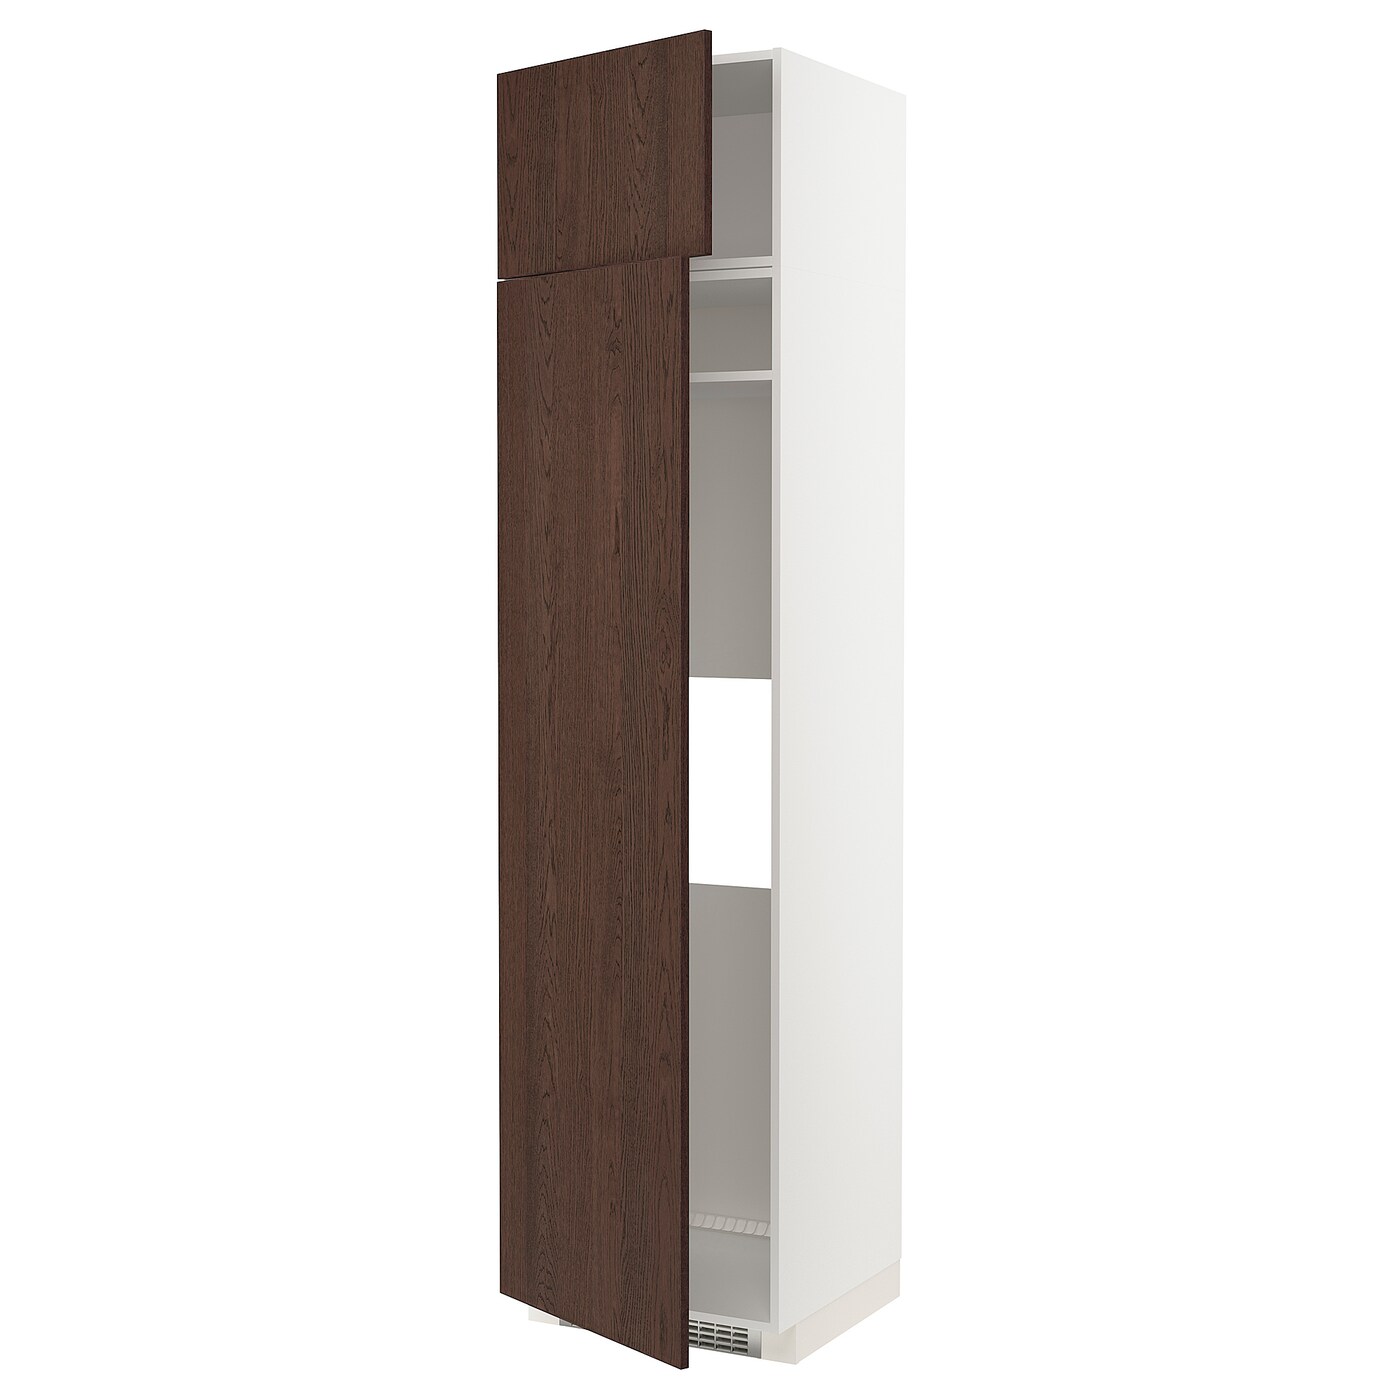 Высокий кухонный шкаф - IKEA METOD/МЕТОД ИКЕА, 240х60х60 см, белый/коричневый